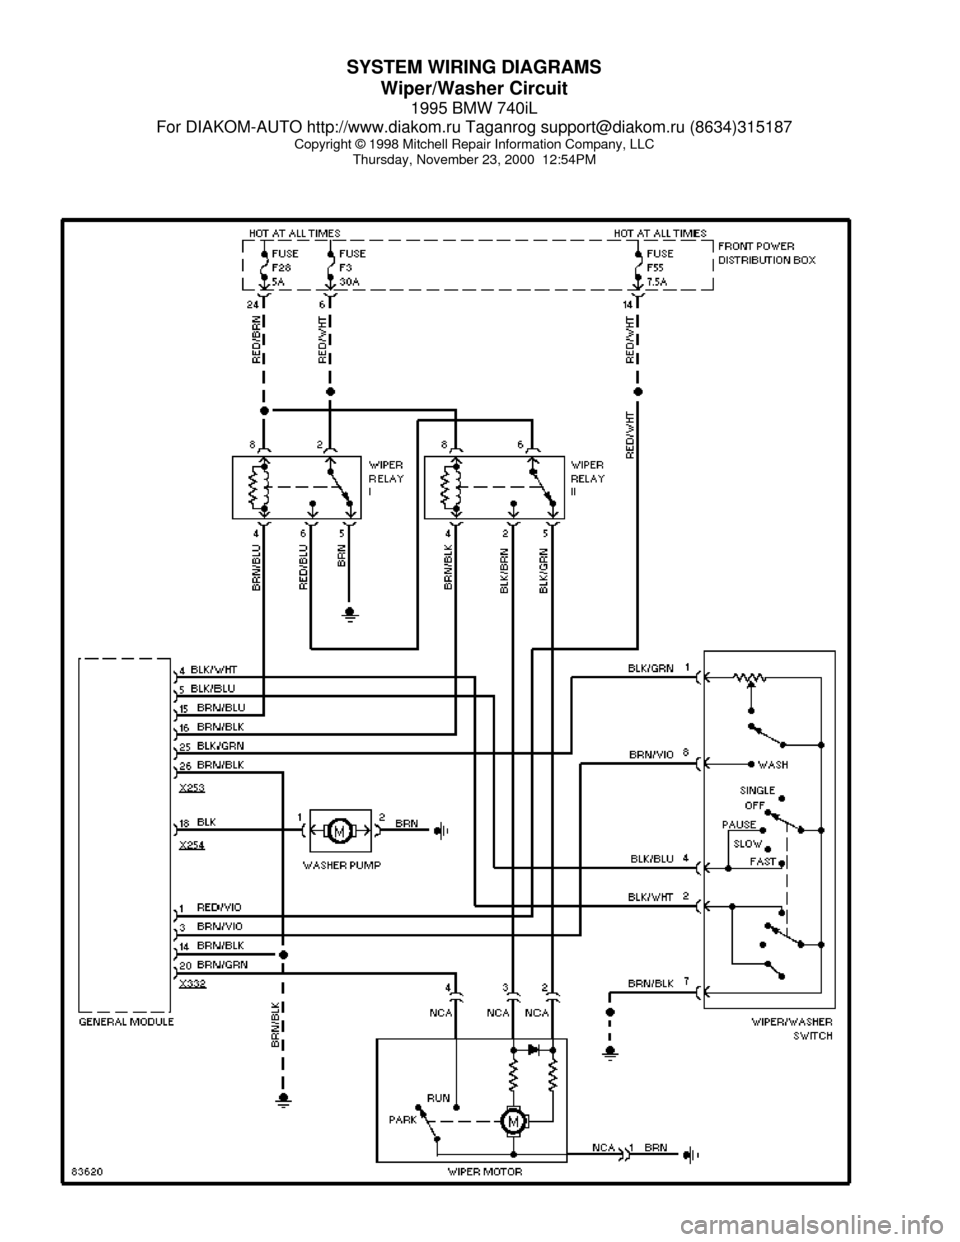 BMW 740il 1995 E38 System Wiring Diagrams SYSTEM WIRING DIAGRAMS
Wiper/Washer Circuit
1995 BMW 740iL
For DIAKOM-AUTO http://www.diakom.ru Taganrog support@diakom.ru (8634)315187
Copyright © 1998 Mitchell Repair Information Company, LLC
Thurs